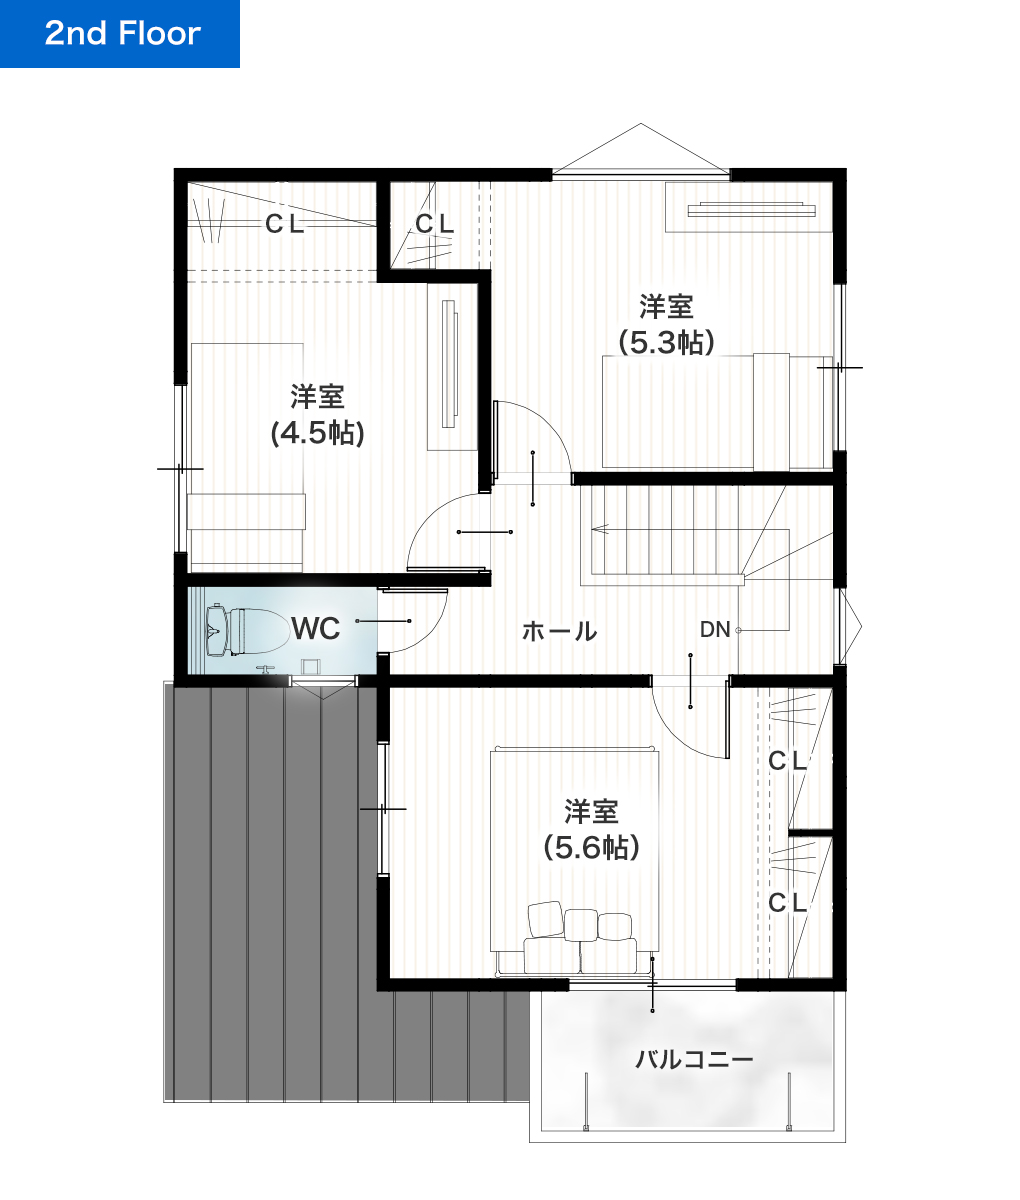 合志市須屋13期A 25坪 4LDK 建売・一戸建ての新築物件 2階間取り図